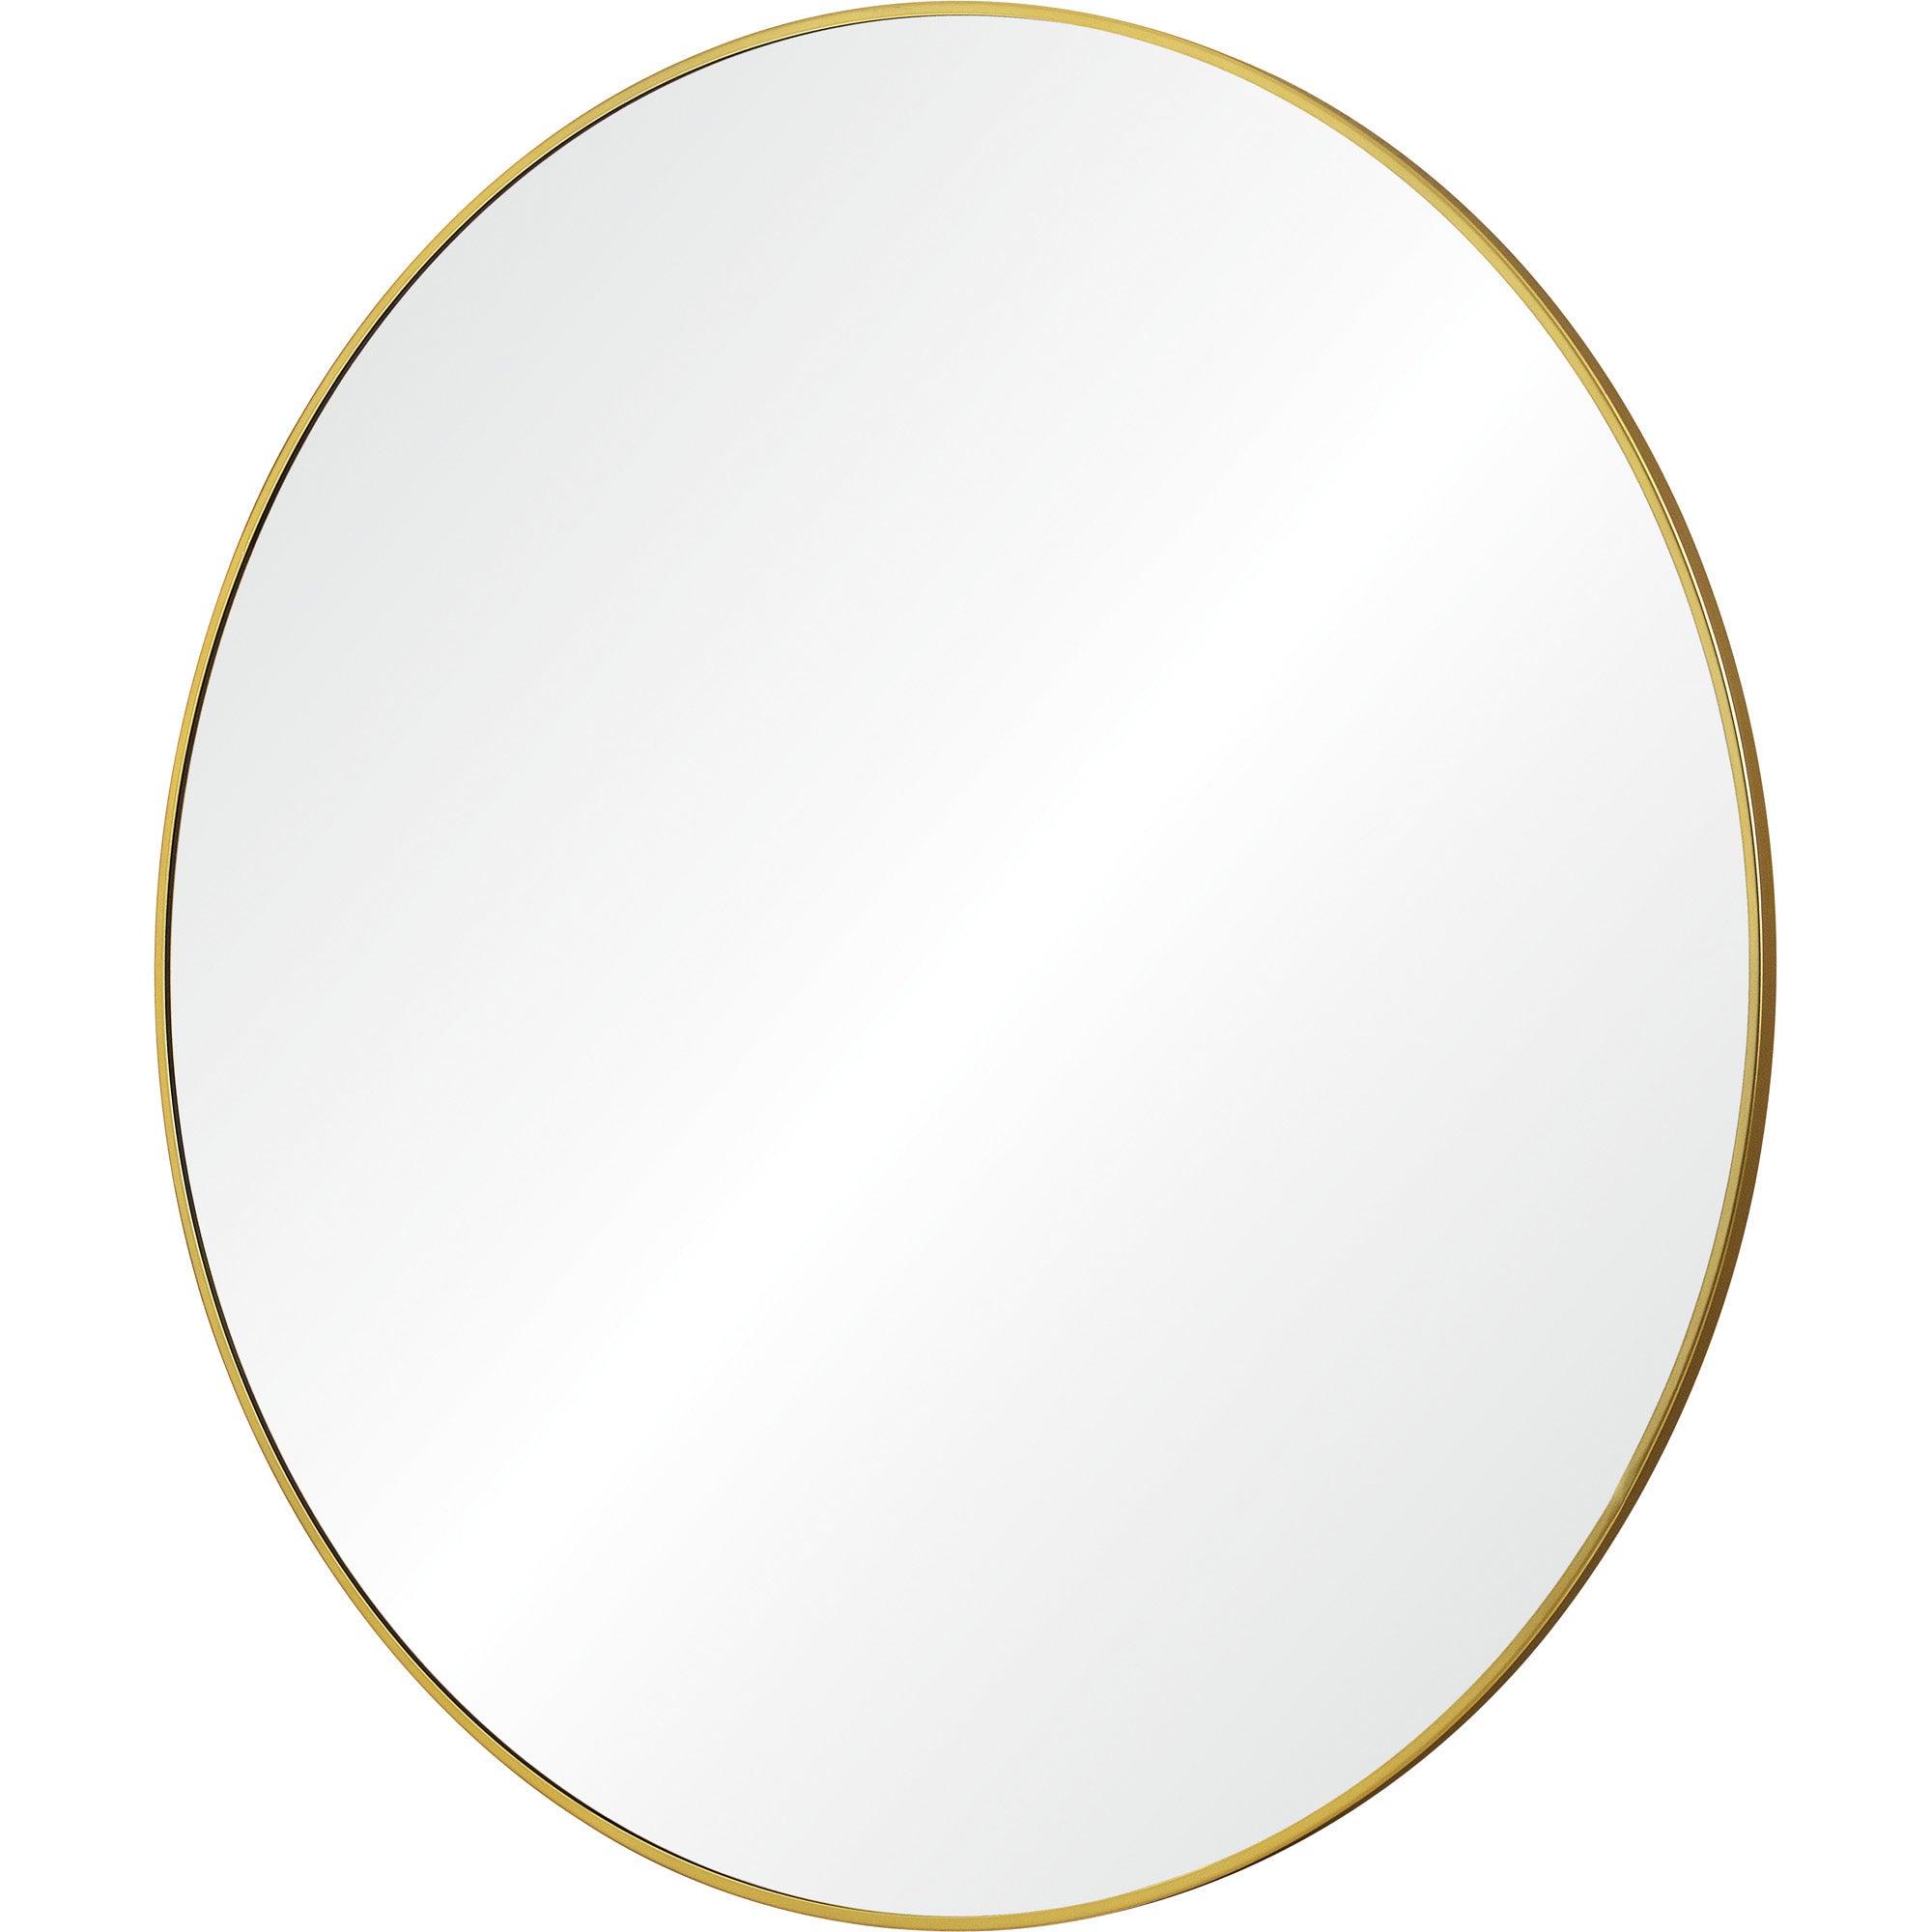 Fragoso Mirror